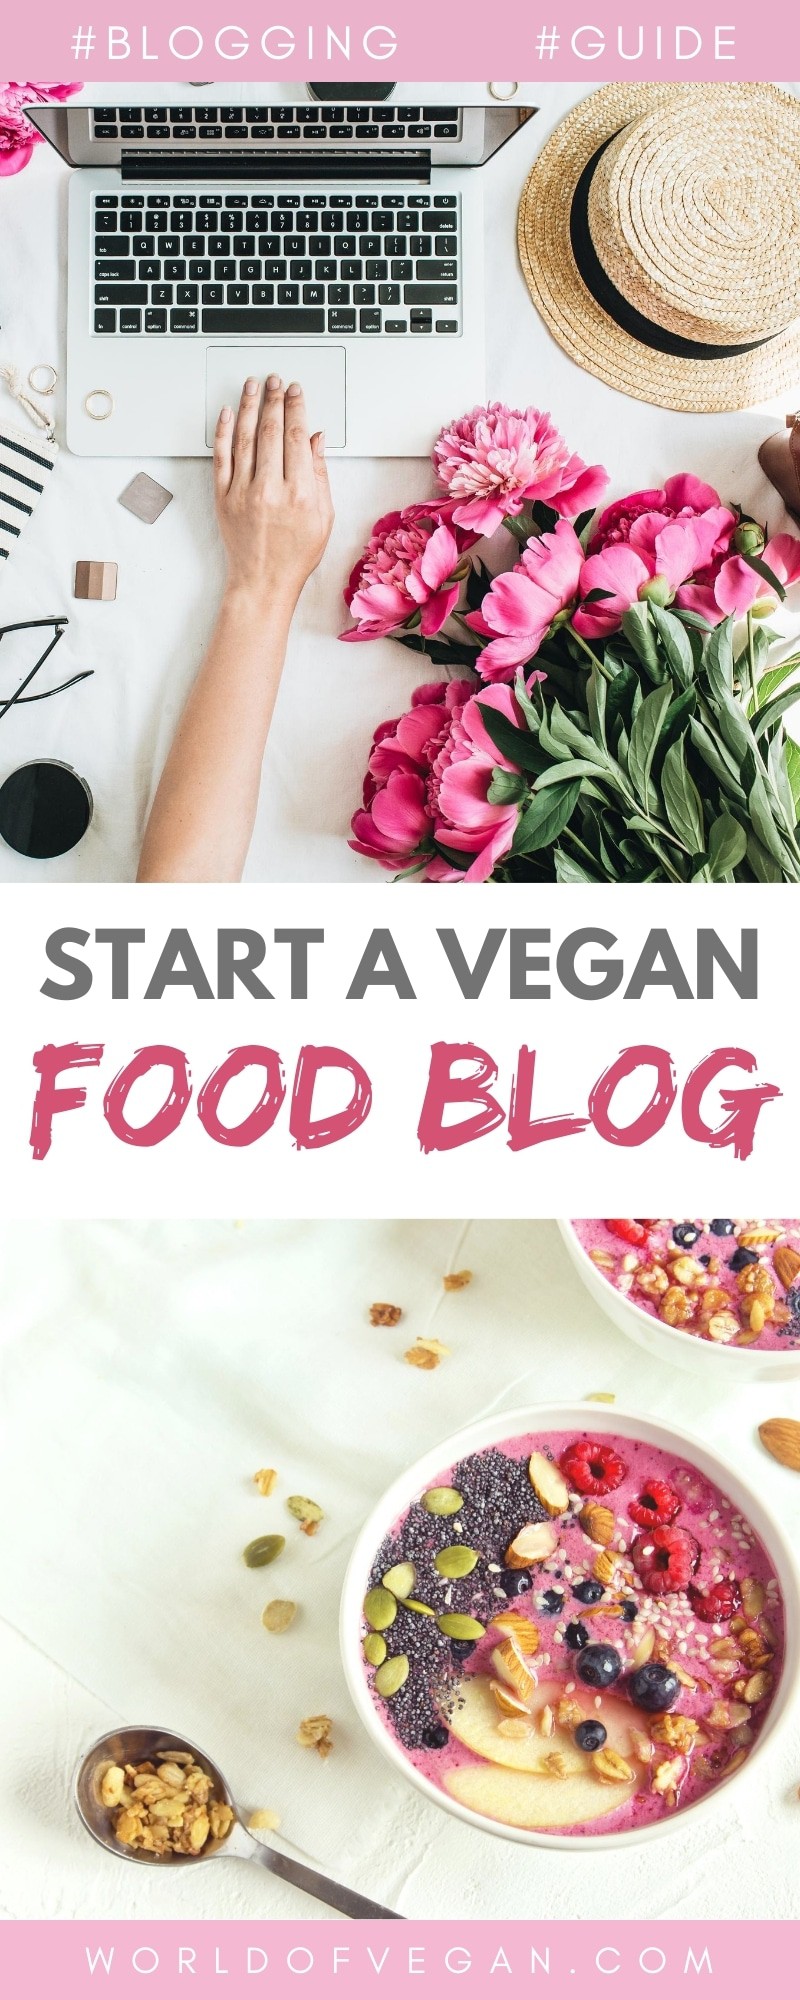 How to Start Your Vegan Food Blog | World of Vegan Guide